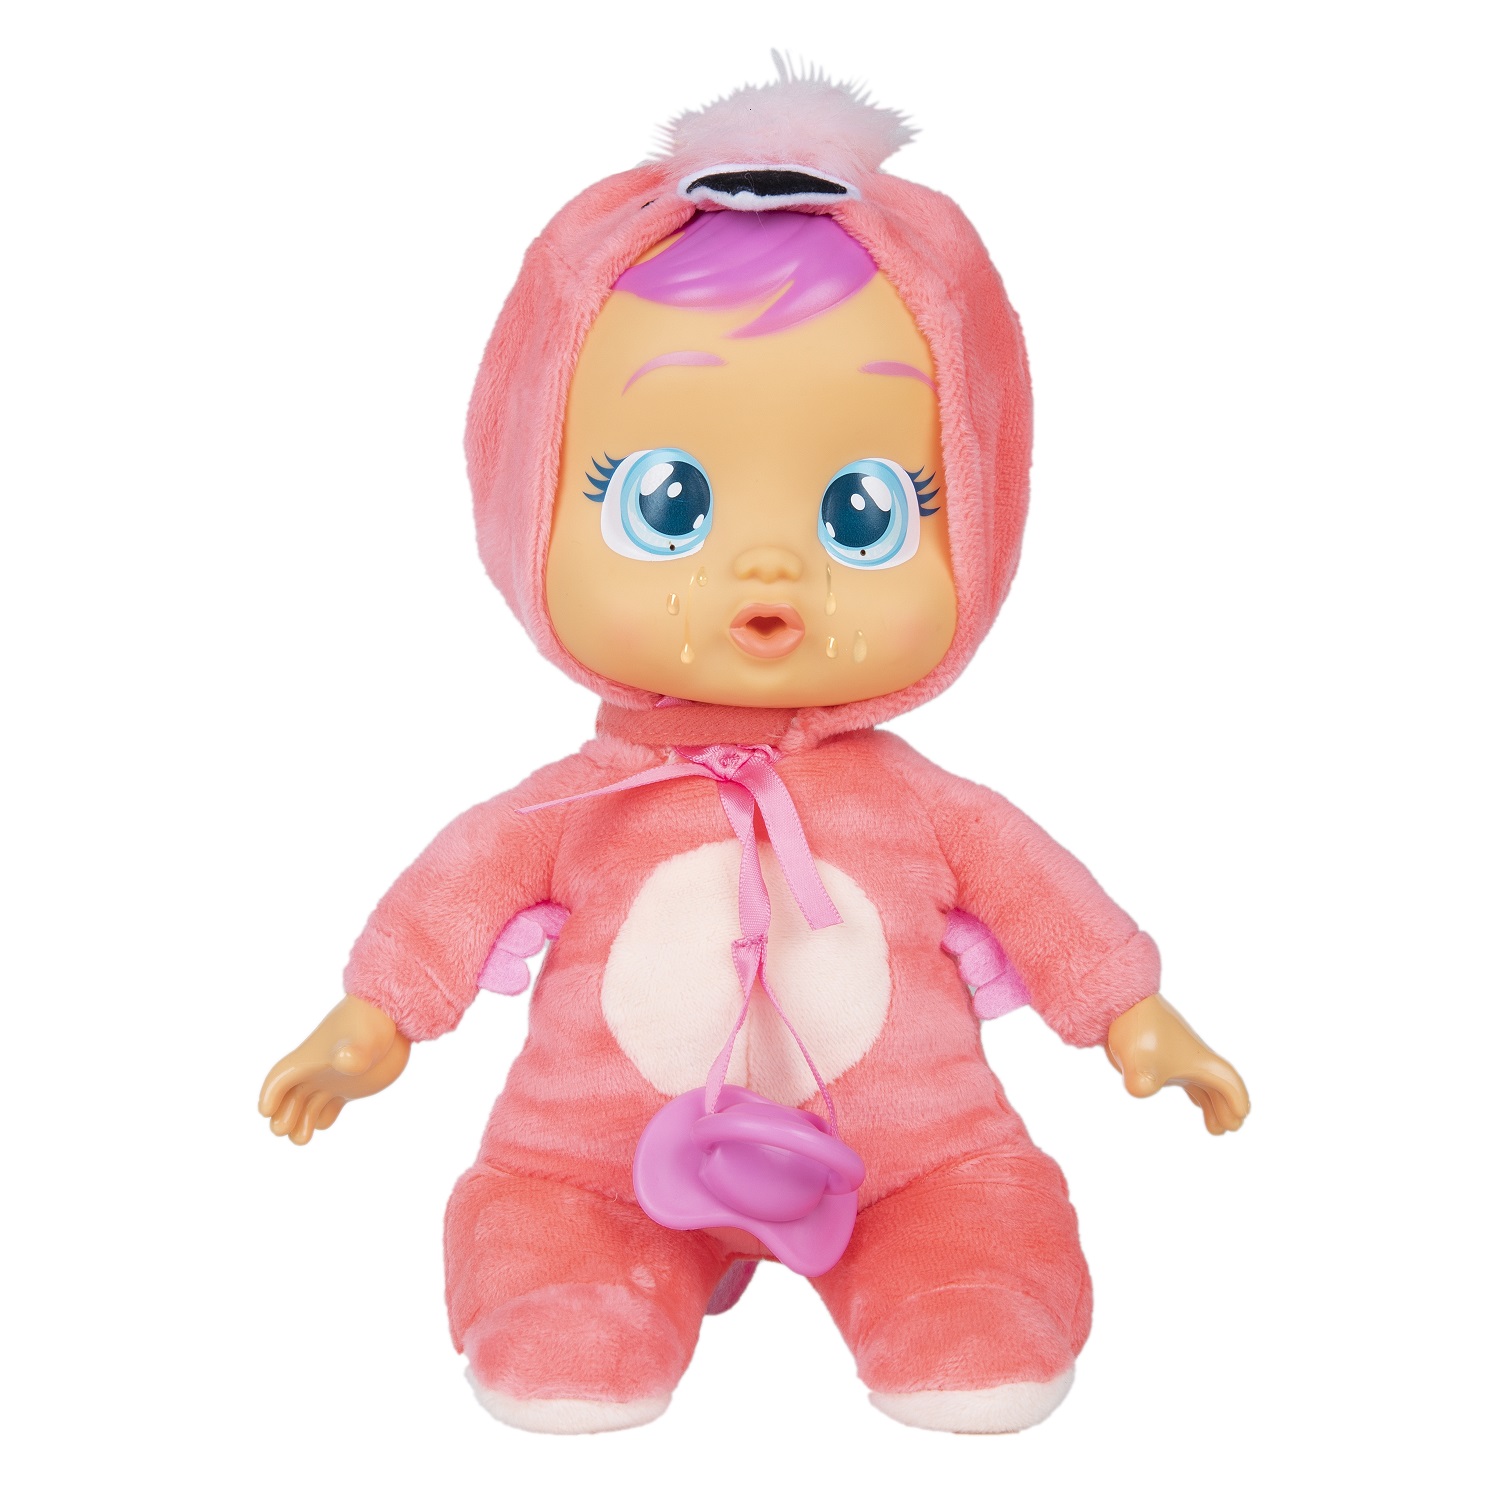 Край Бебис 41037 Кукла Фэнси Малышка плачущая Cry Babies - Пенза 